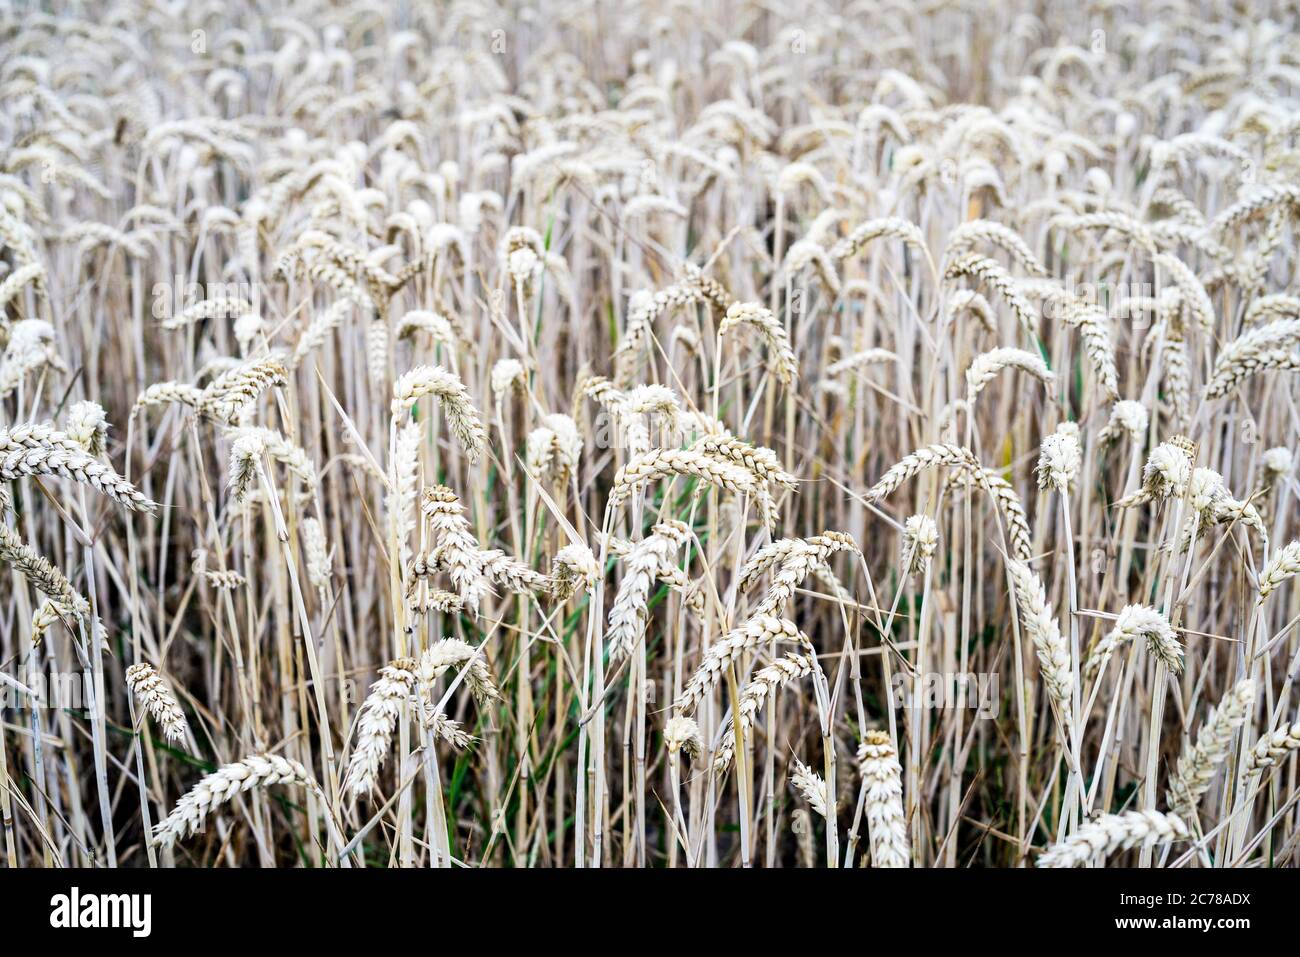 Wheat field close-up Stock Photo